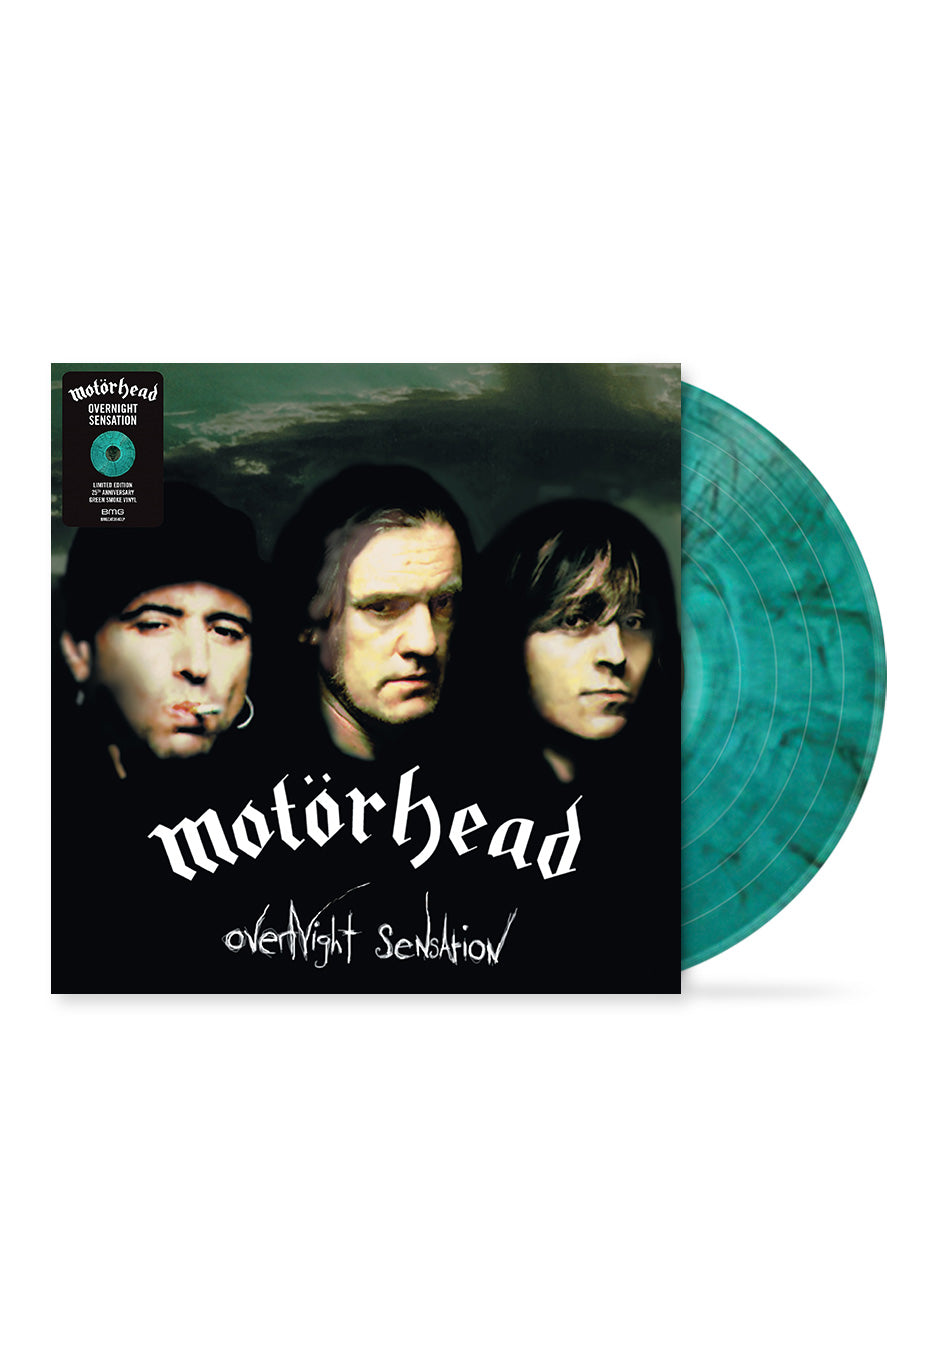 Motörhead - Overnight Sensation (25th Anniversary Edition) Green And Black Smoke - Colored Vinyl